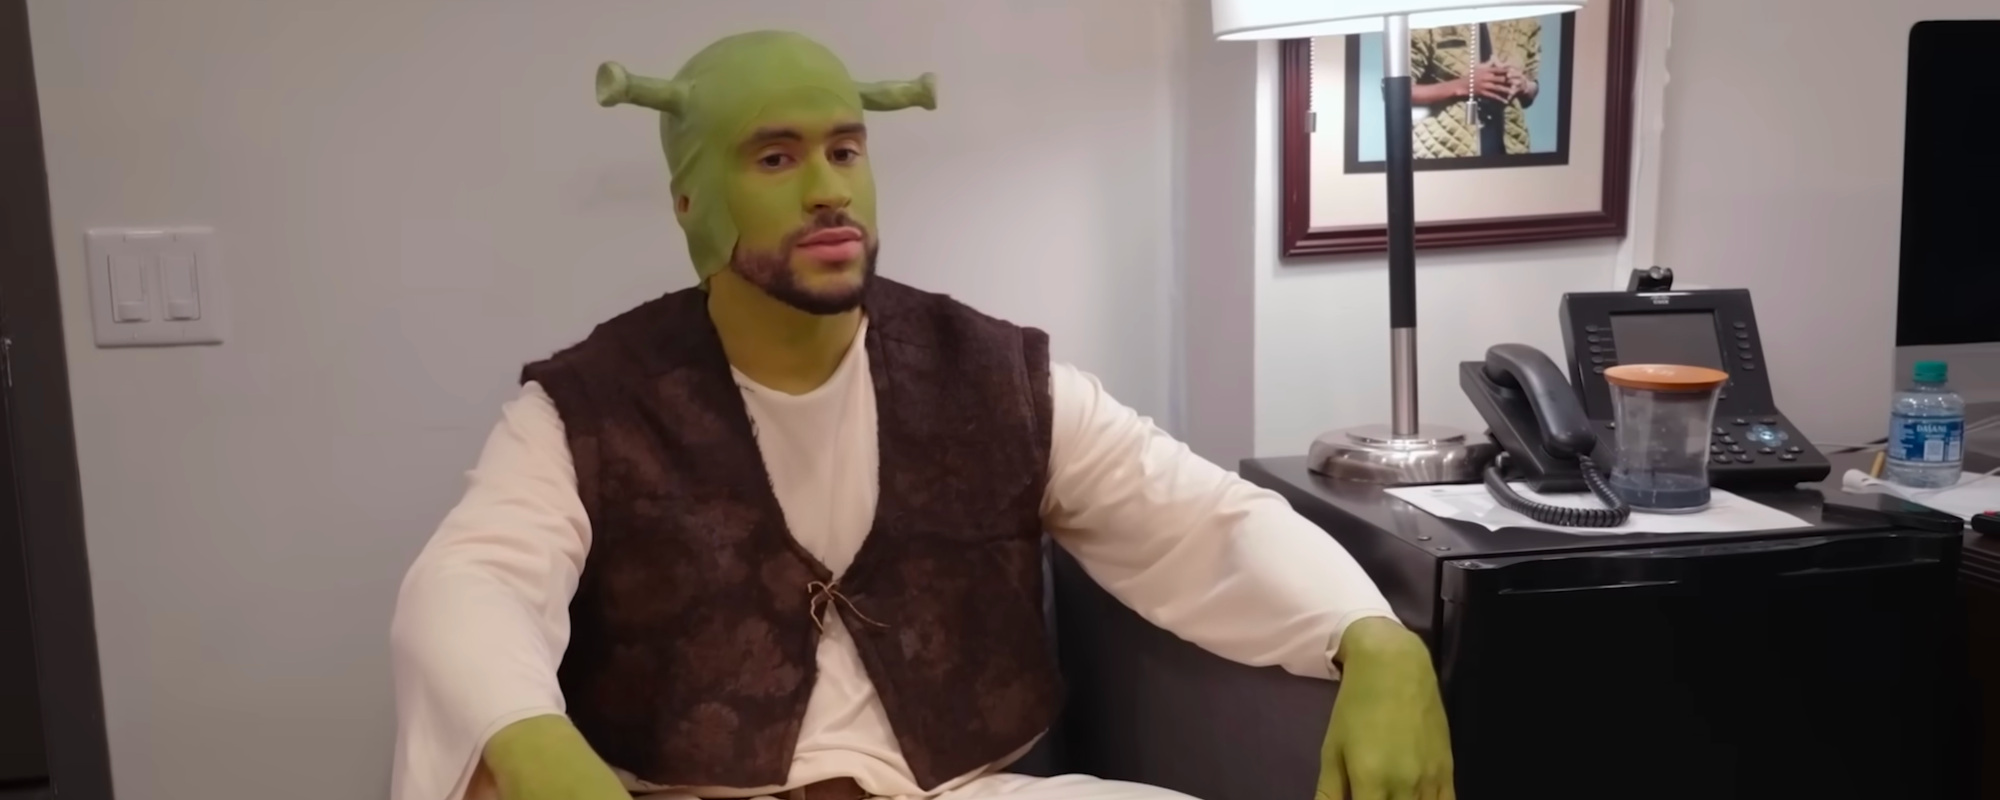 Watch: Bad Bunny Dresses as Shrek in Wacky ‘Saturday Night Live’ Skit